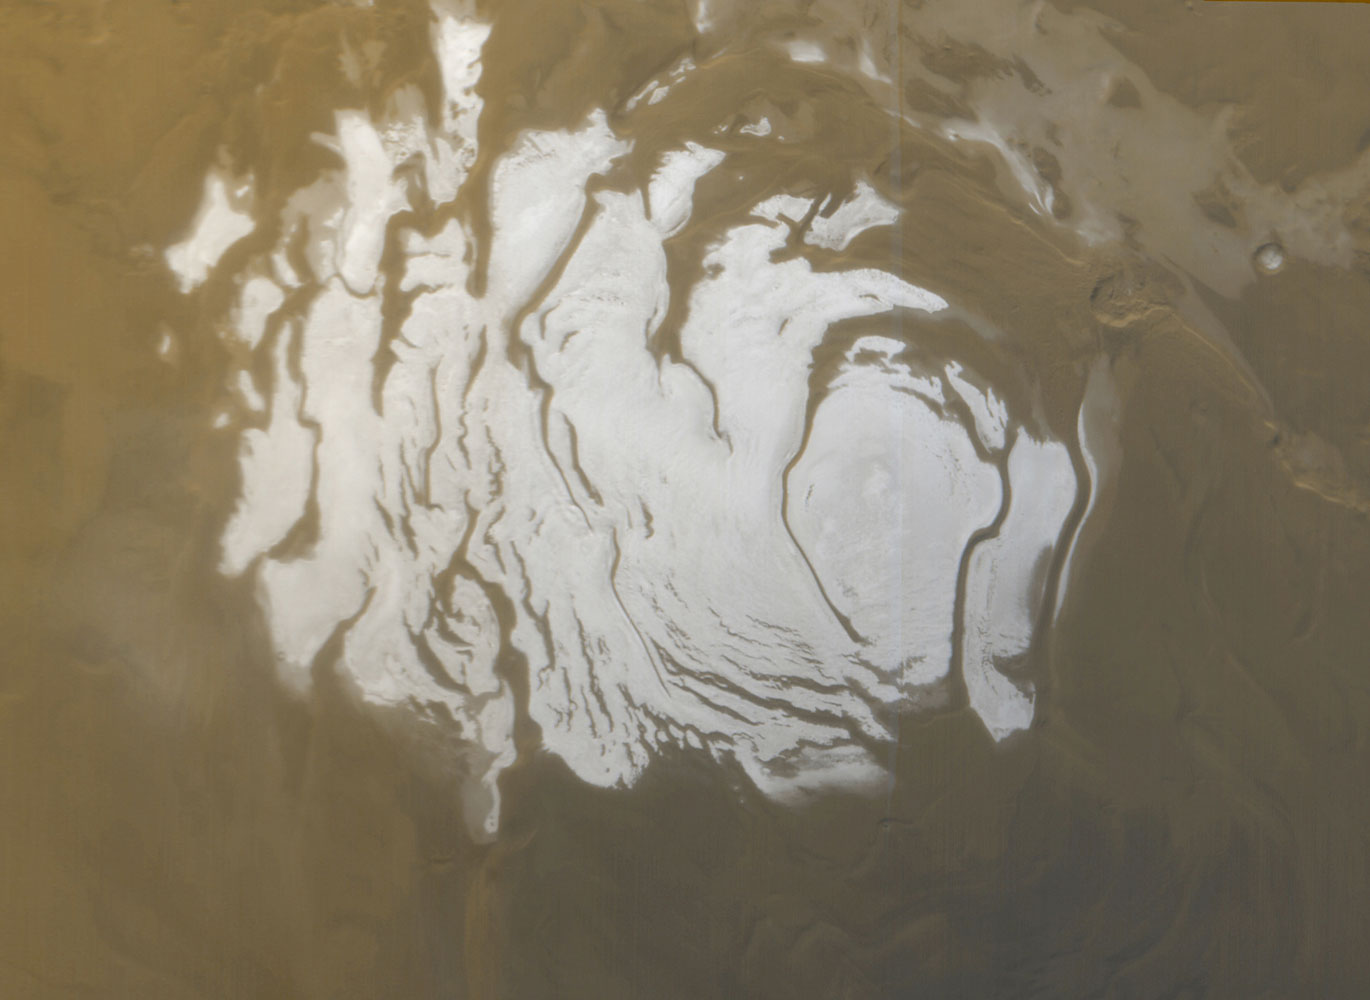 South Polar Cap in Mars.